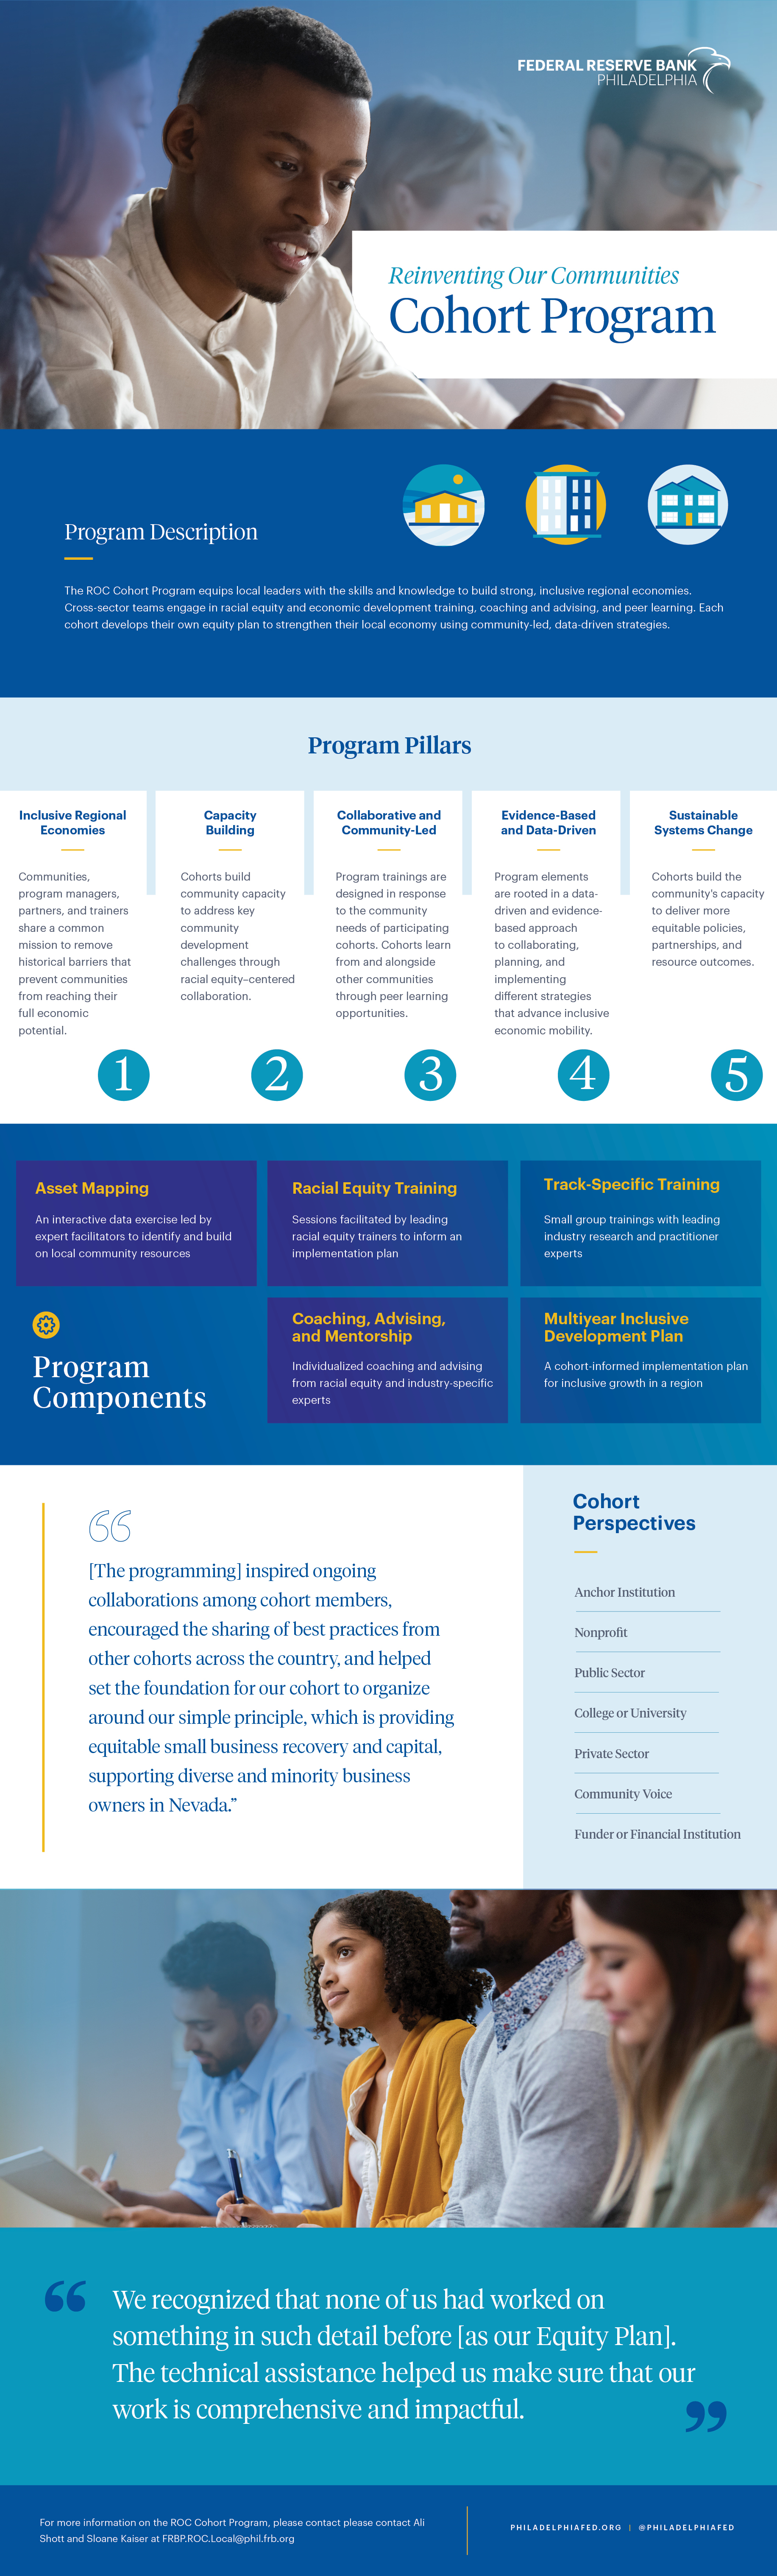 Infographic explaining the Reinventing Our Communities (ROC) Cohort Program